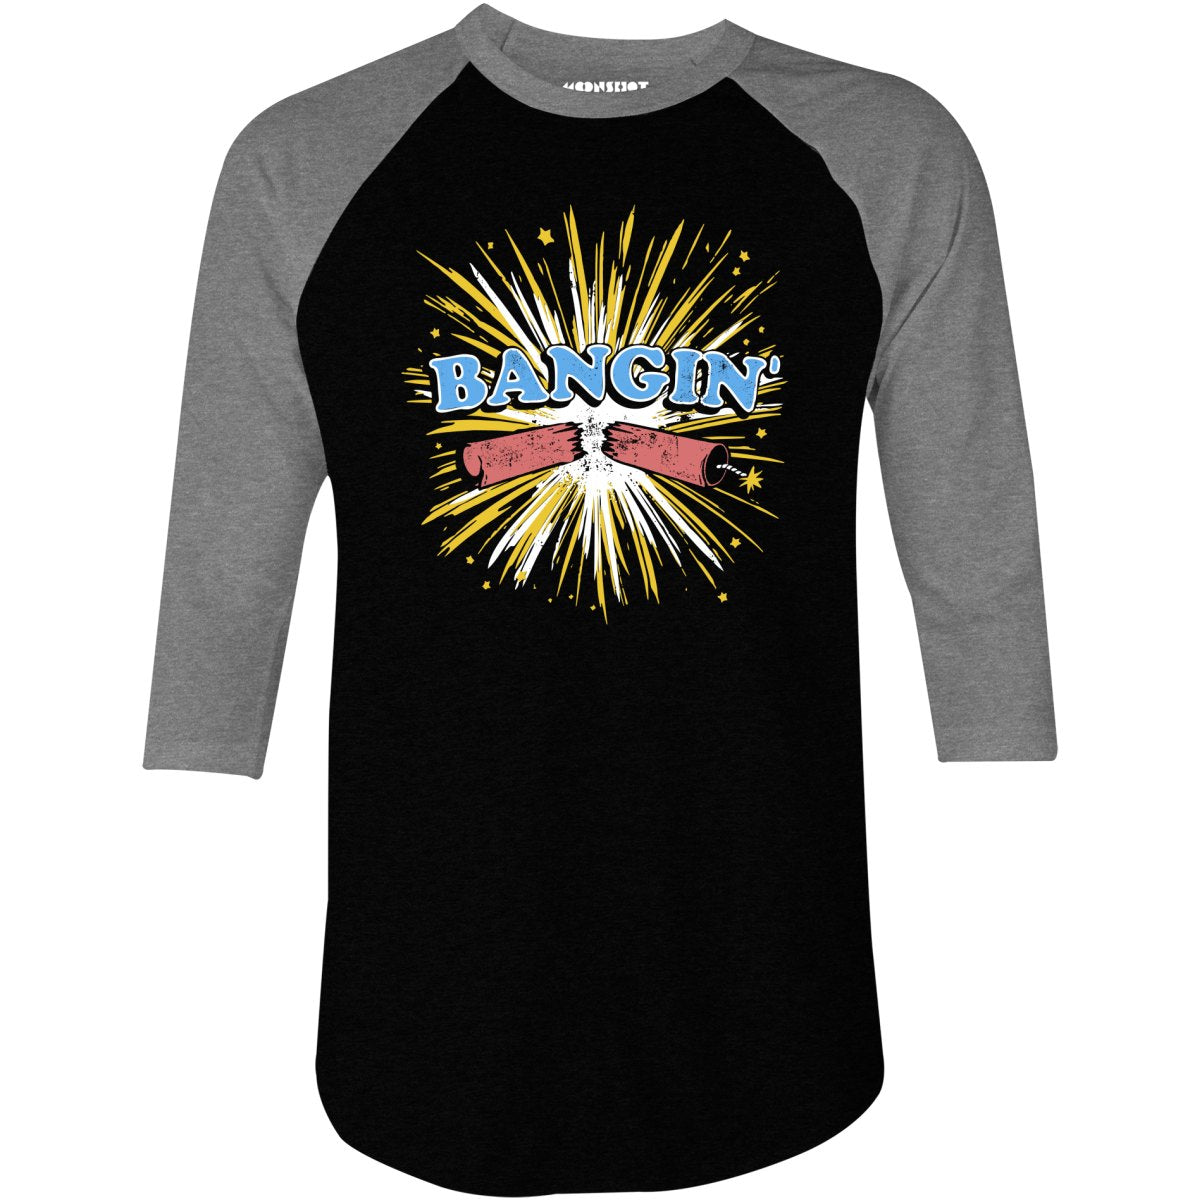 Bangin' - 3/4 Sleeve Raglan T-Shirt